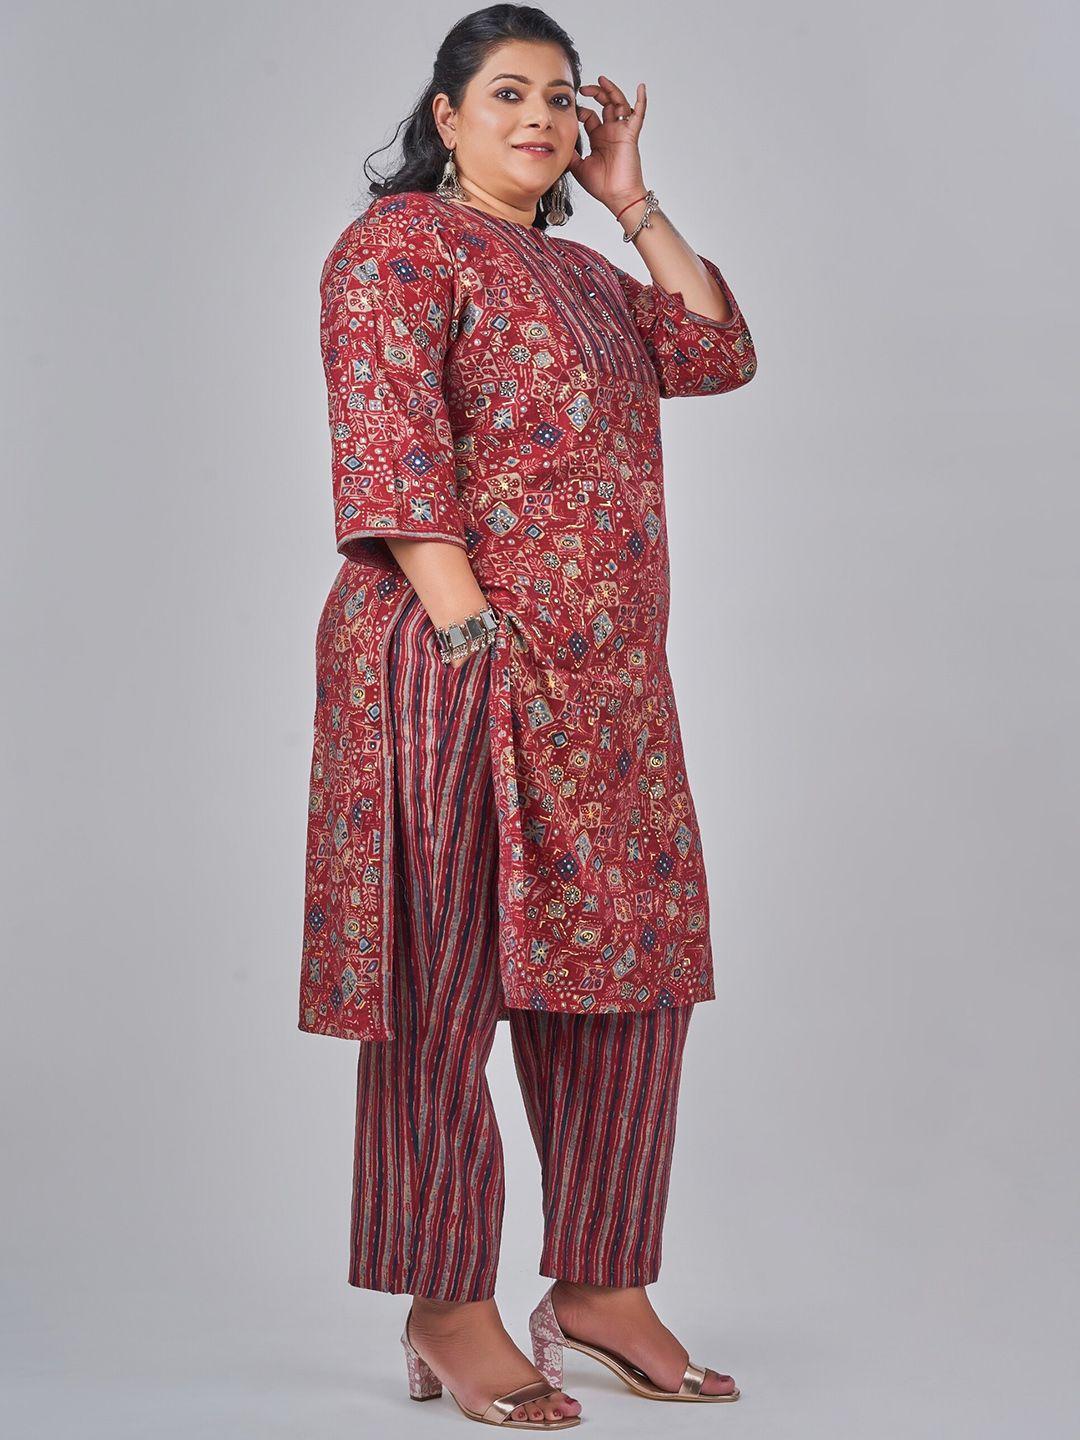 nayra plus size ethnic motifs printed mirror work kurta with trousers